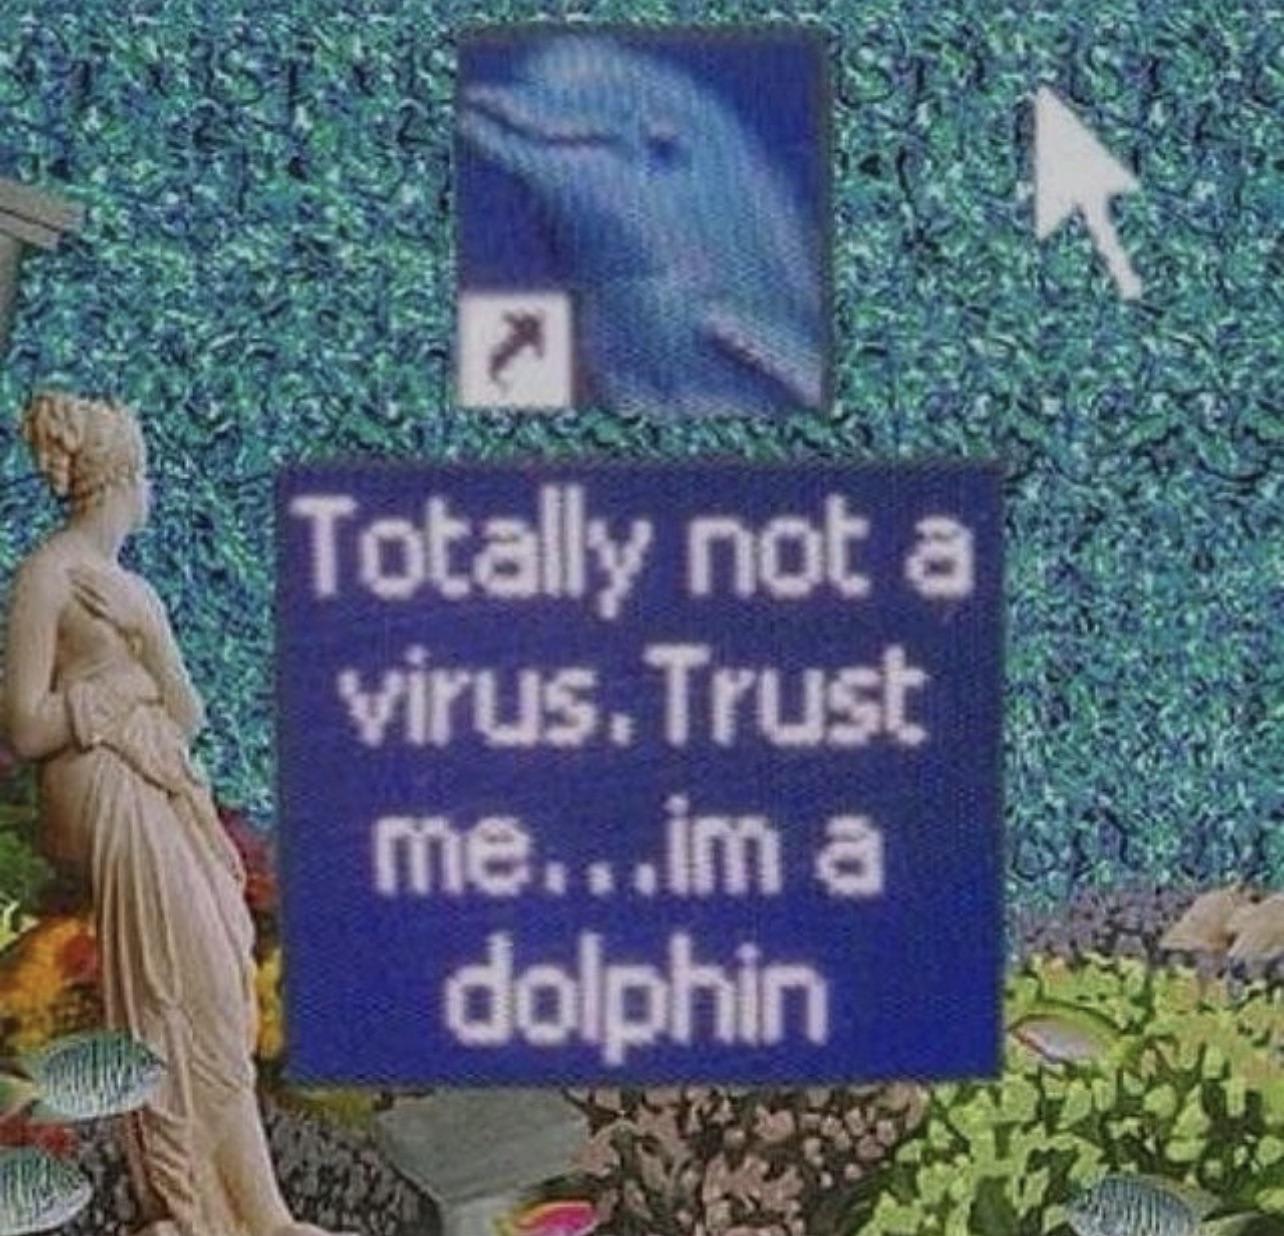 Trust the dolphin